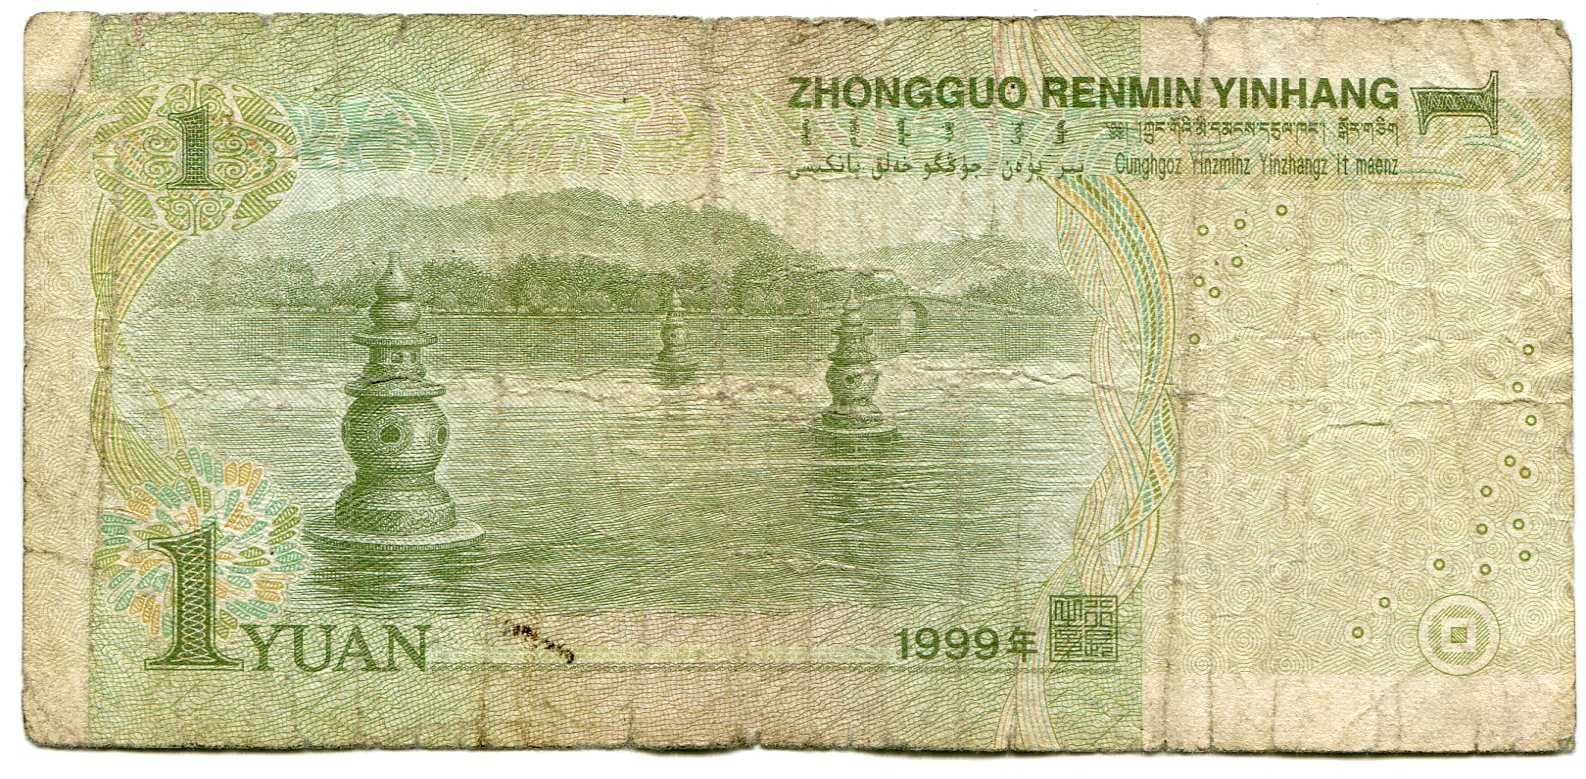 Bancnota China 1 yuan 1999